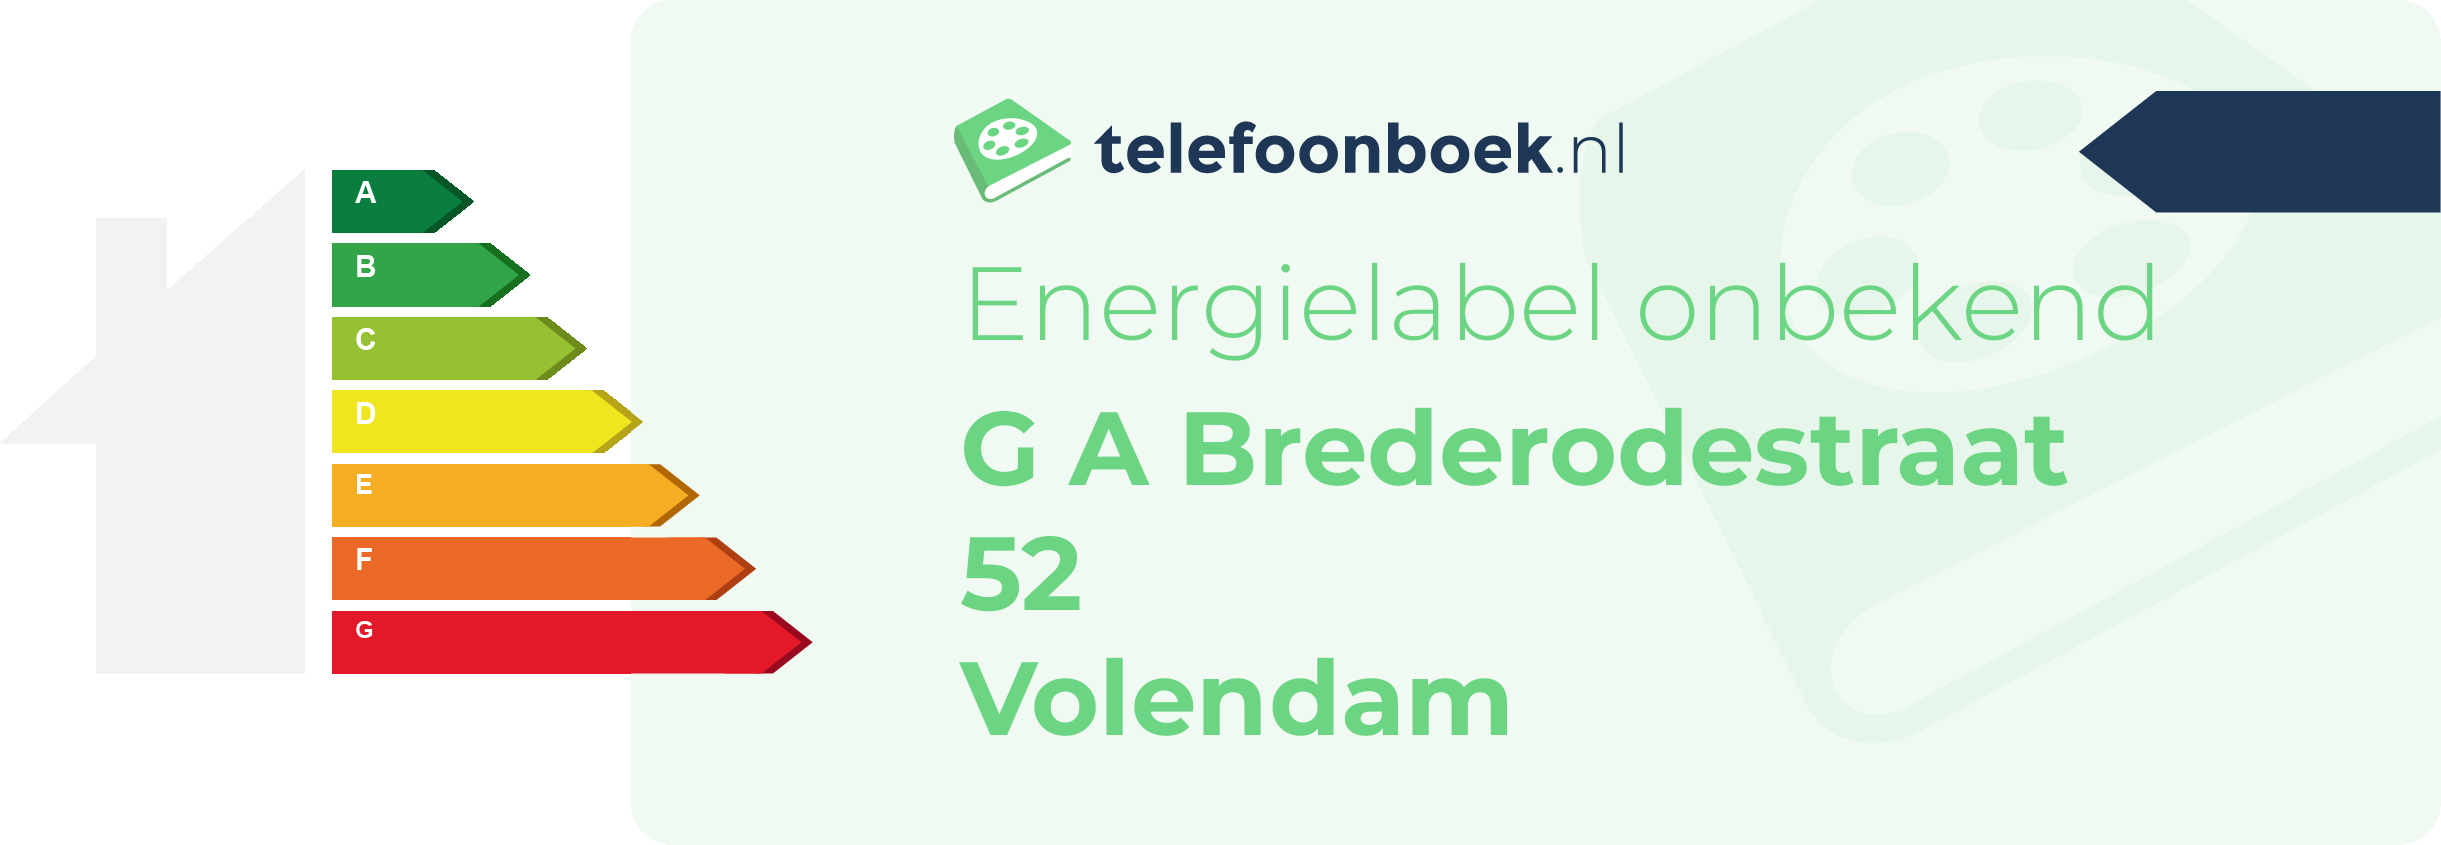 Energielabel G A Brederodestraat 52 Volendam